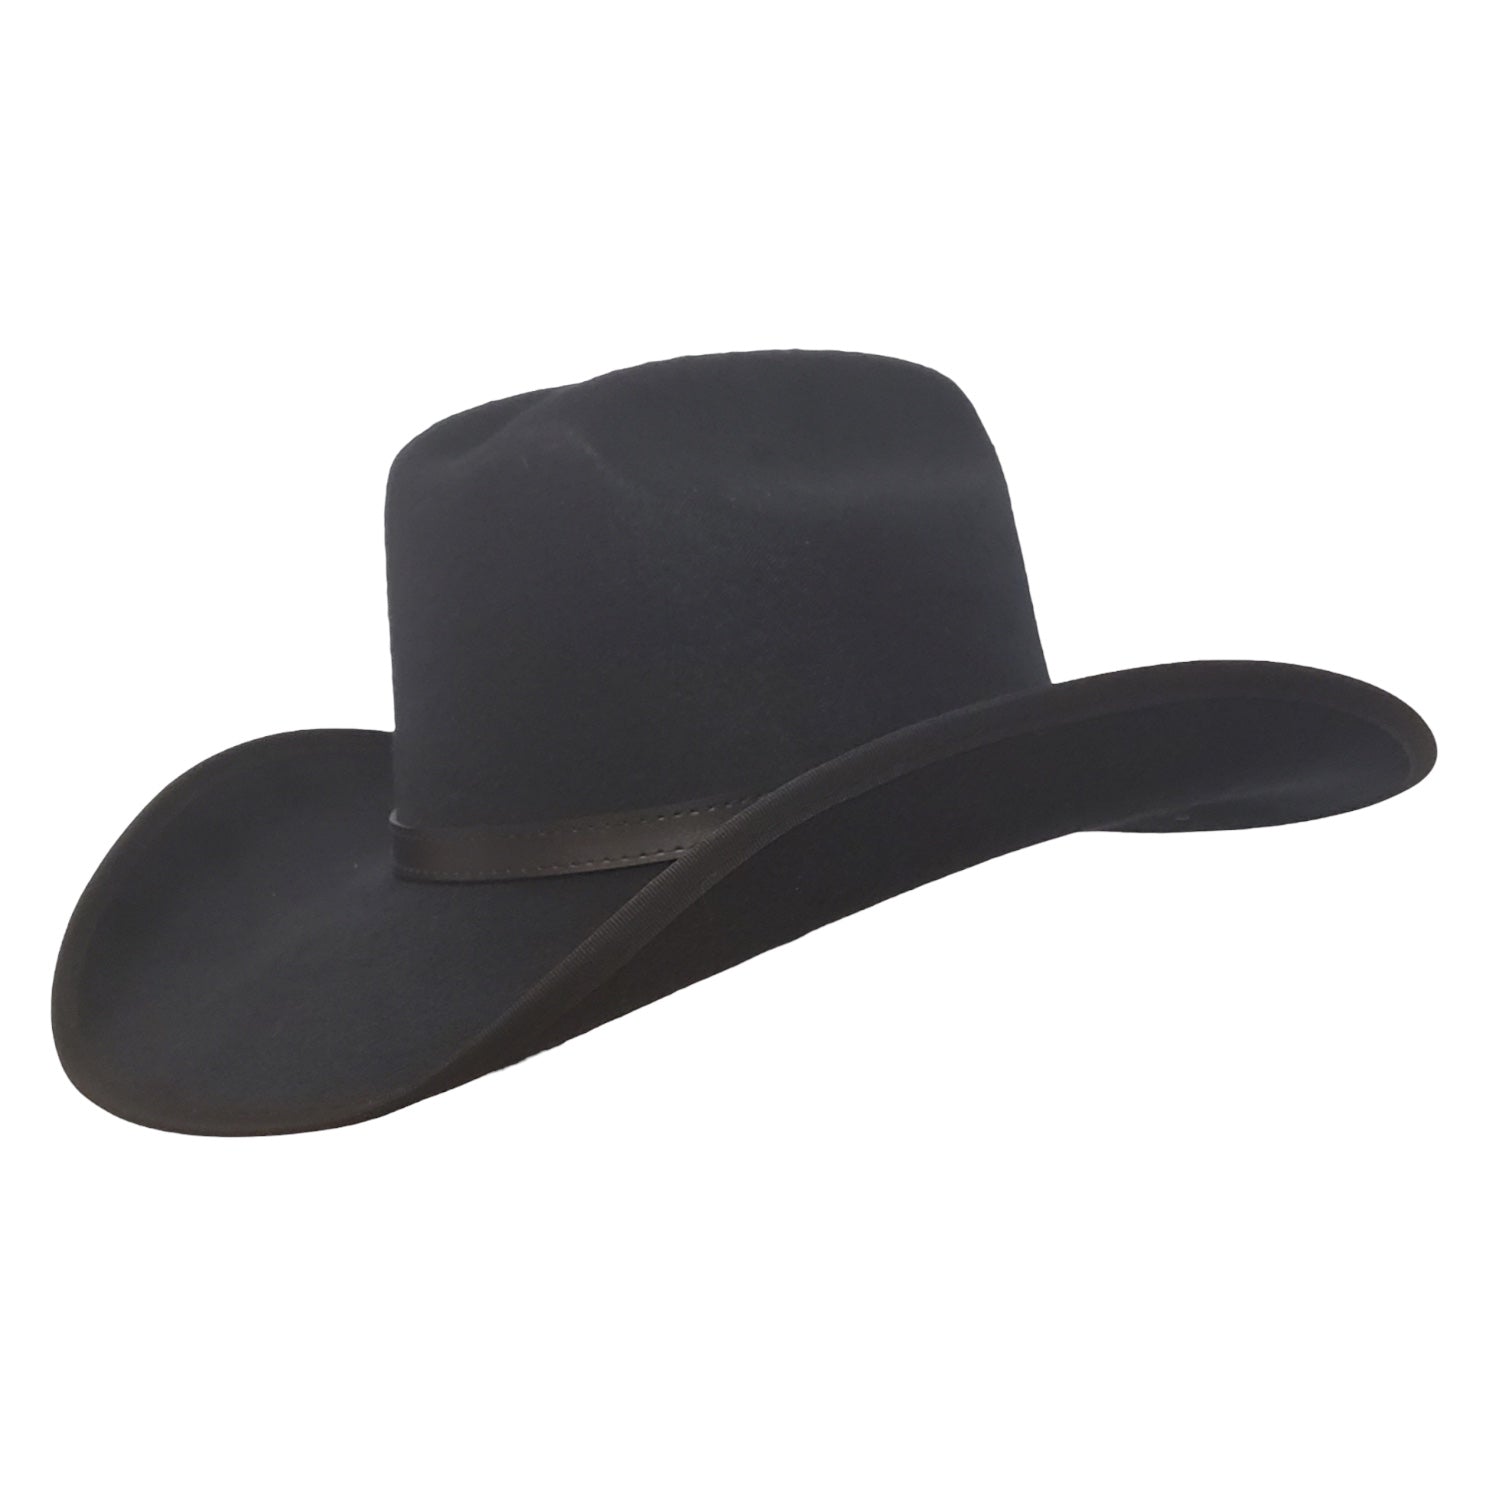 San Antonio Black Felt Cowboy Hat Medium Fits 7-1/8 to 7-1/4